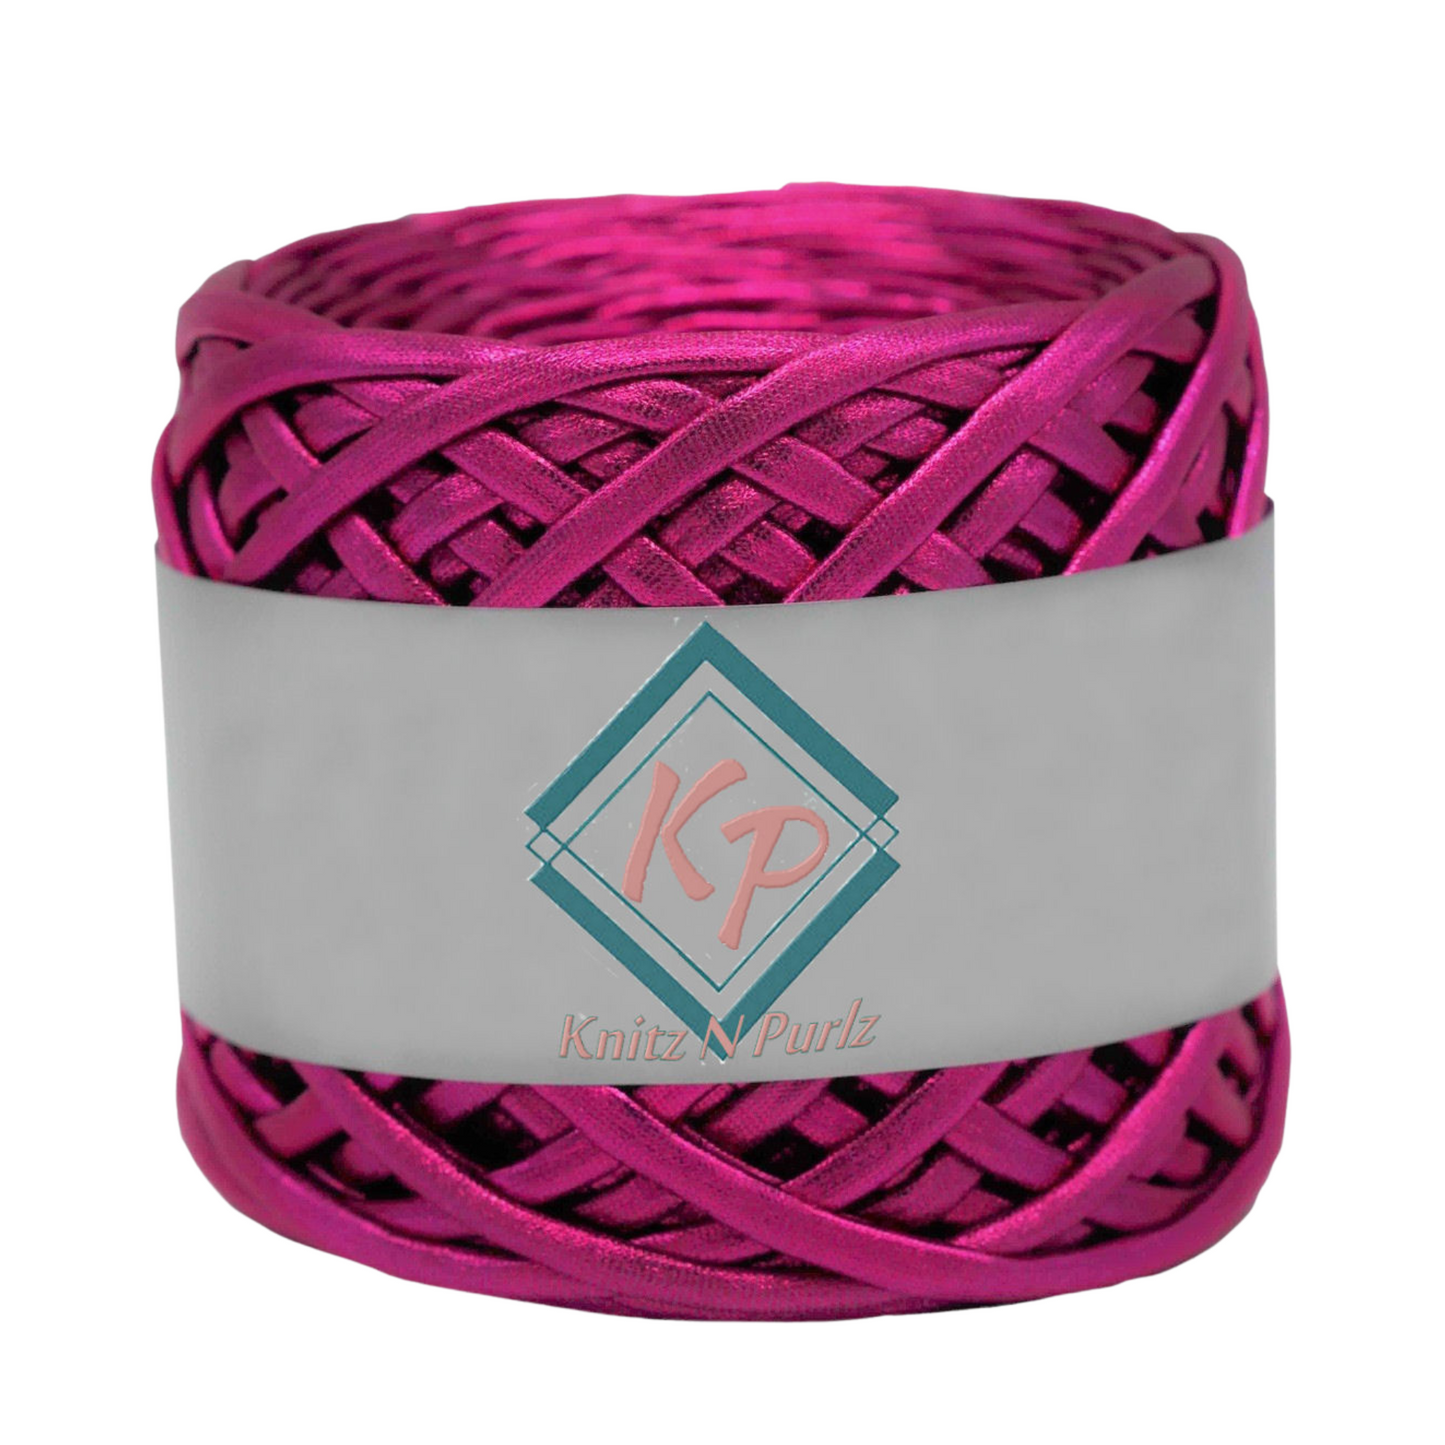 Metallic T-shirt yarn for crocheting baskets, bags, rugs and home decor.